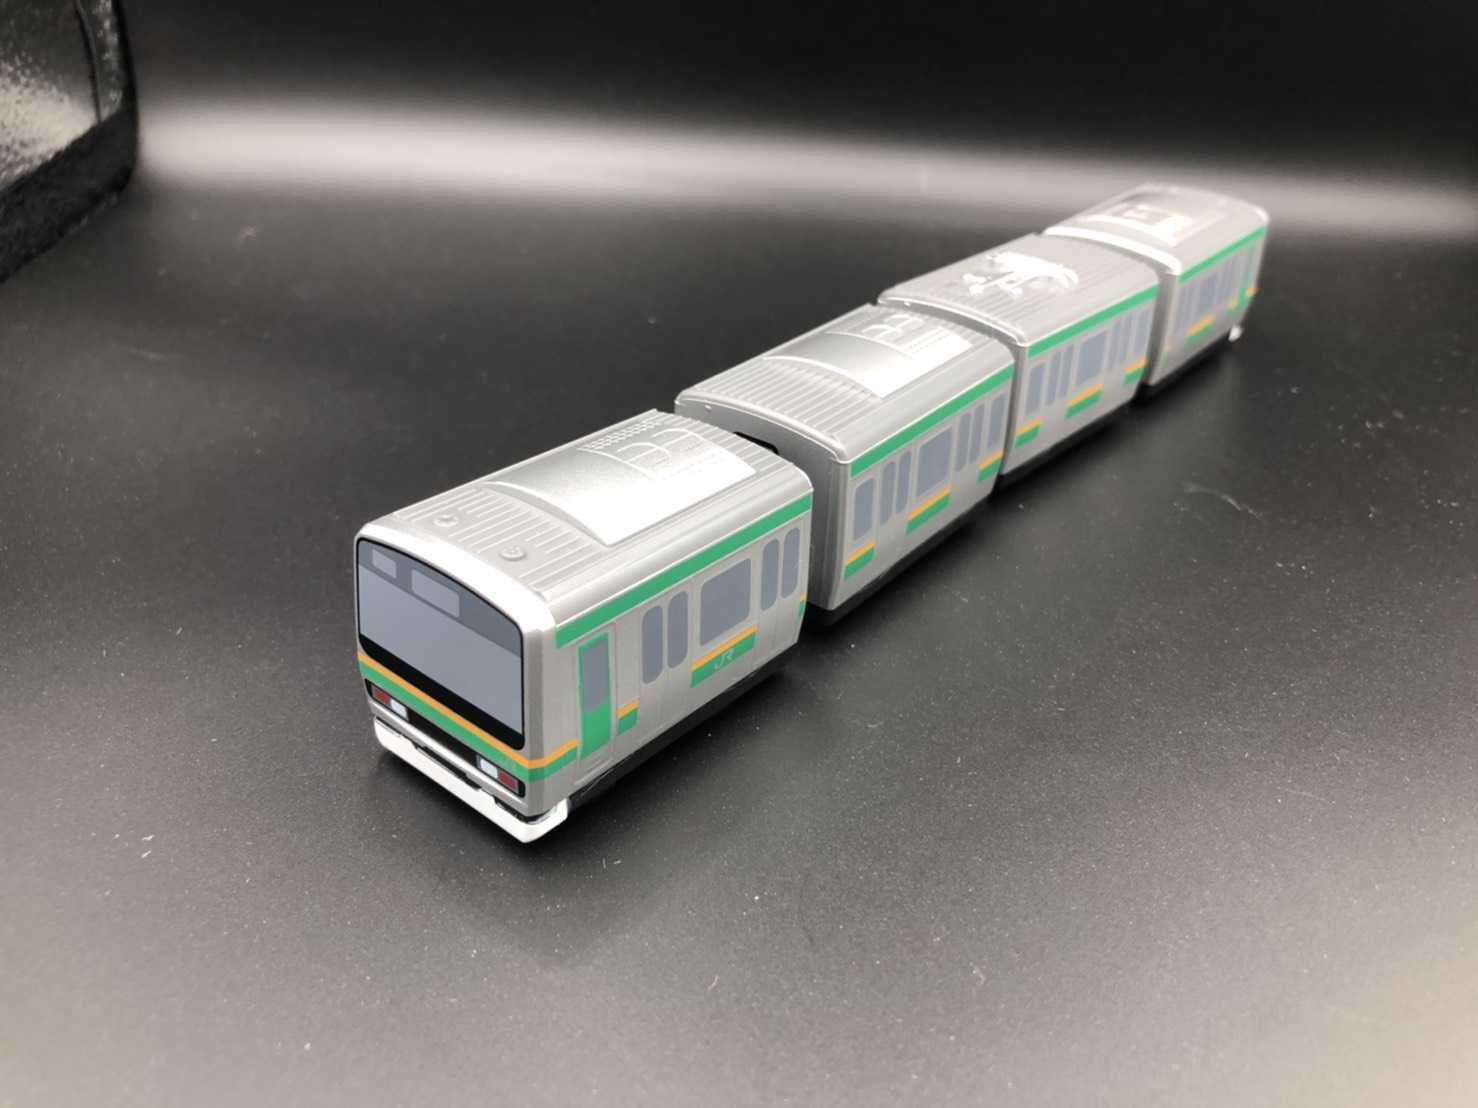 Mini 預購中 鐵支路 QV059T1-3 黃綠JR東日本E231 列車